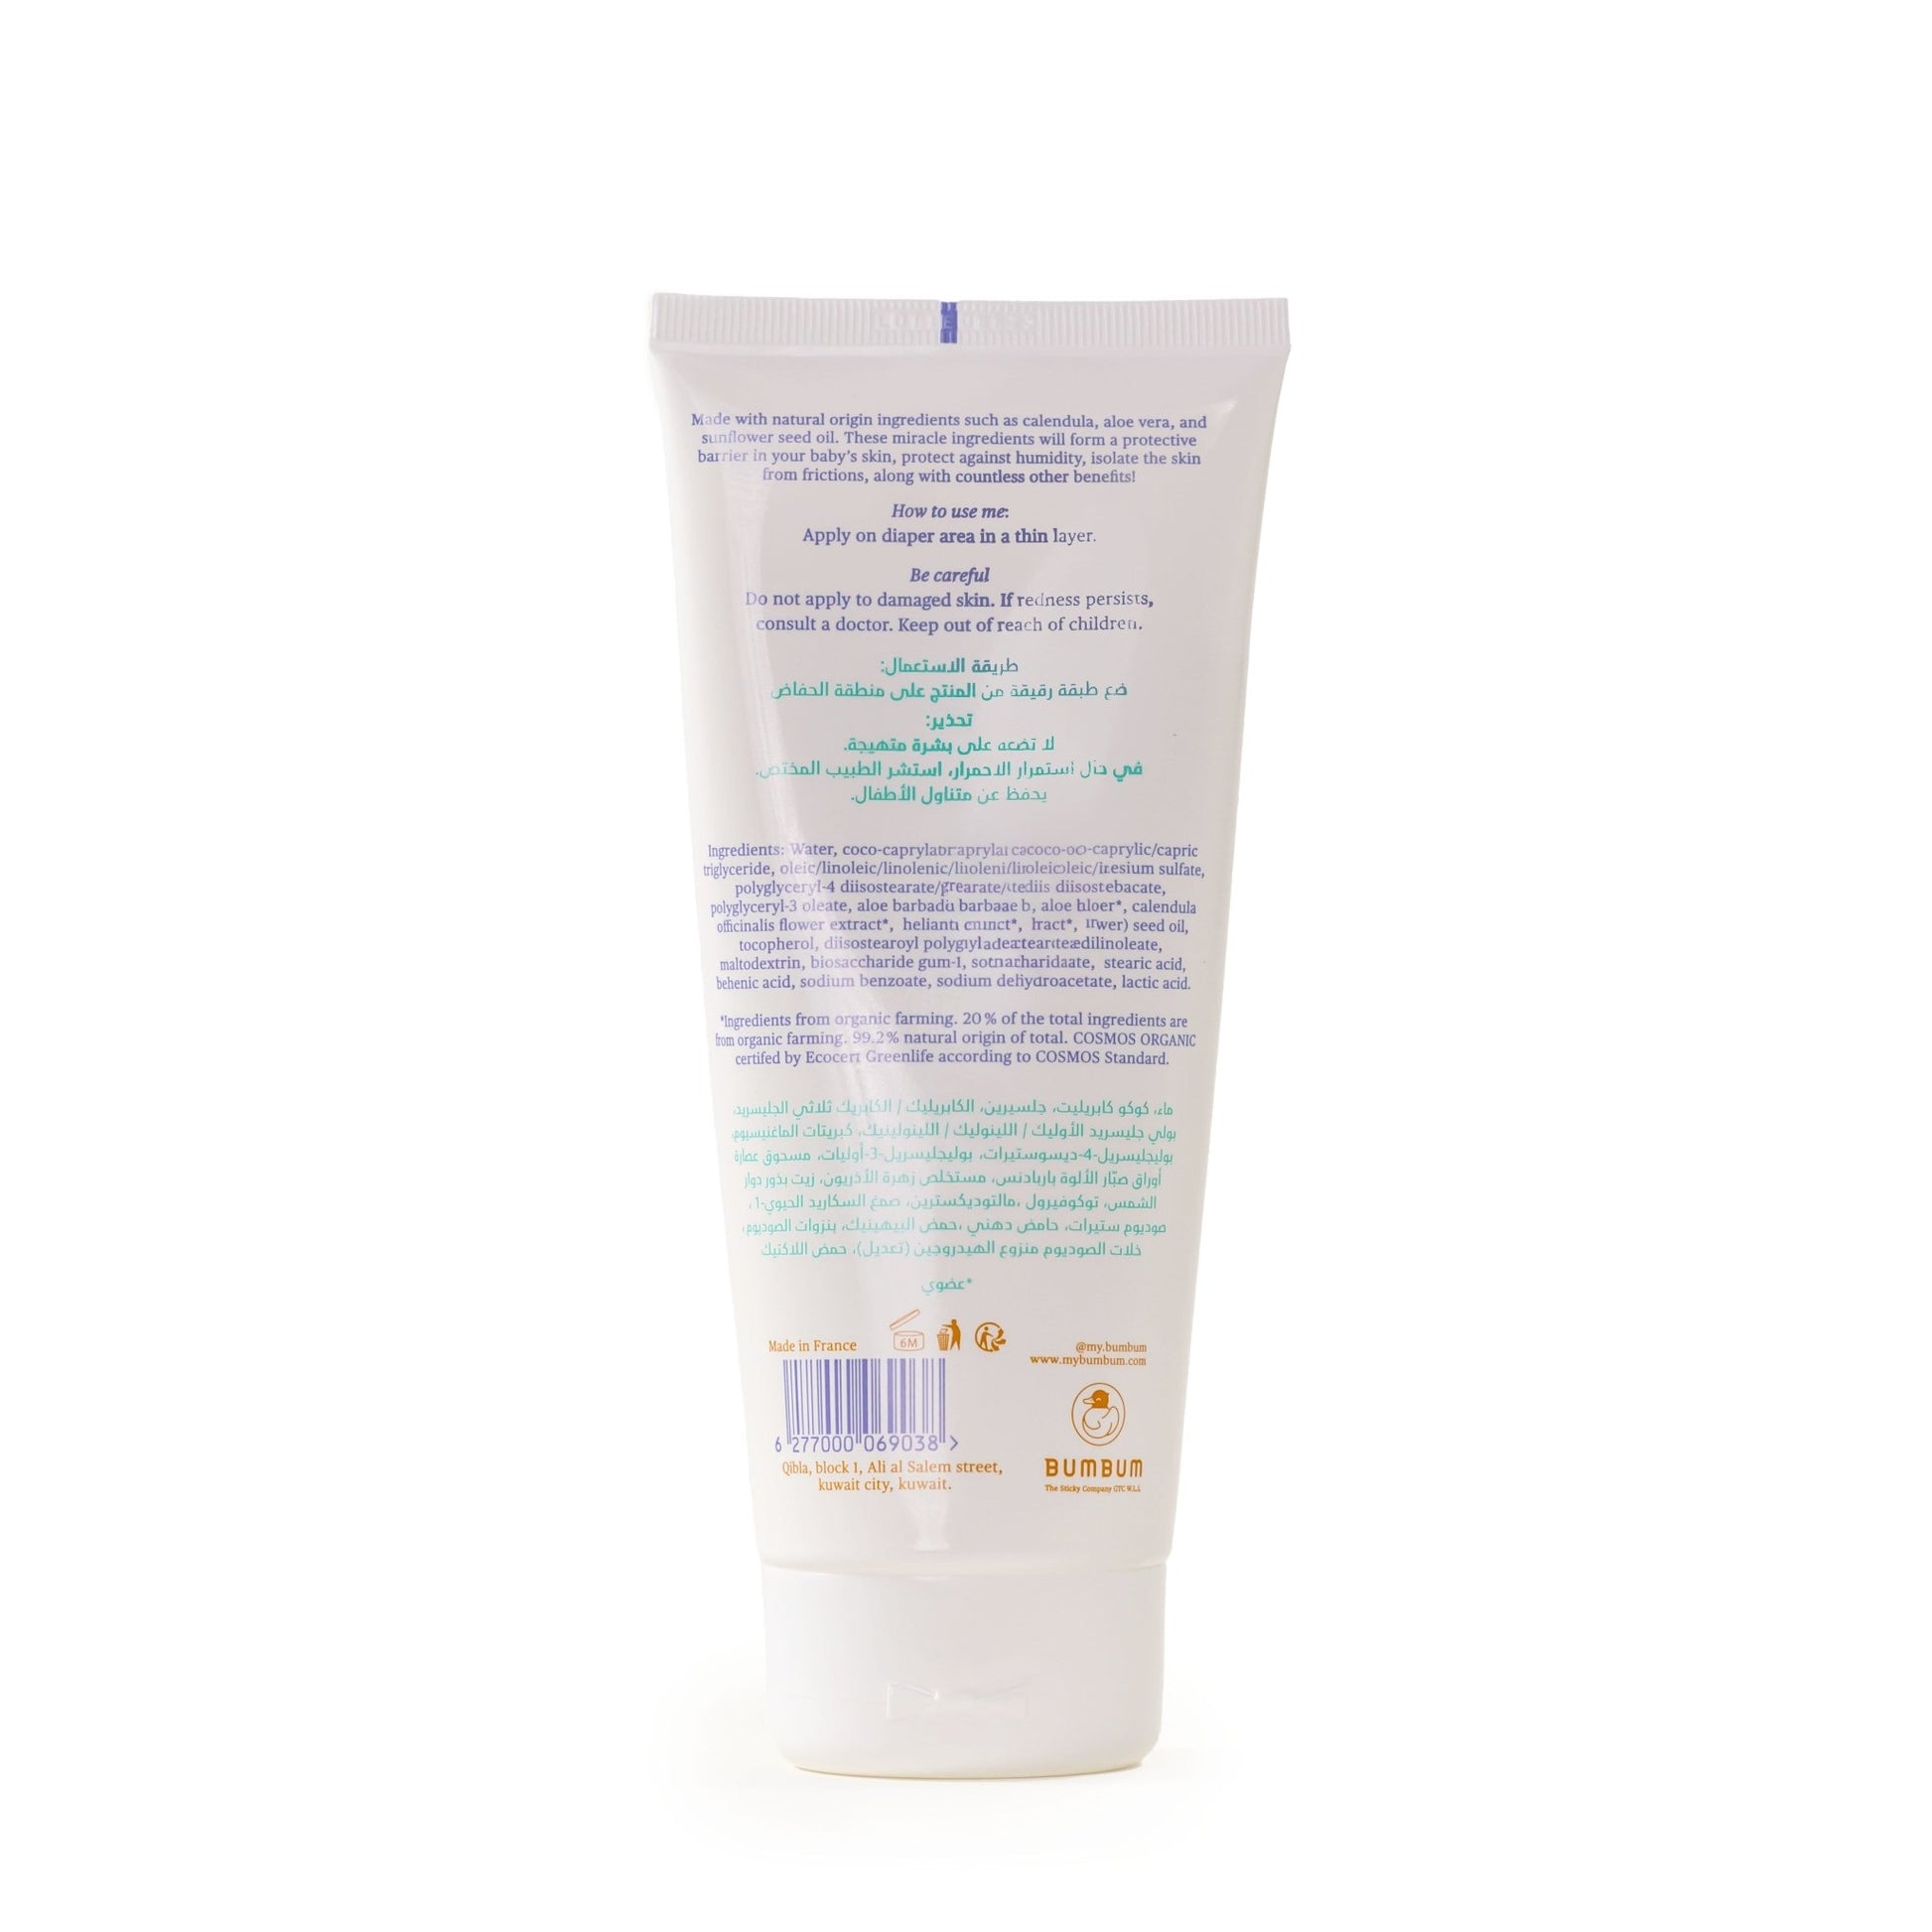 Organic soothing diaper rash cream - 200ml - My BumBum